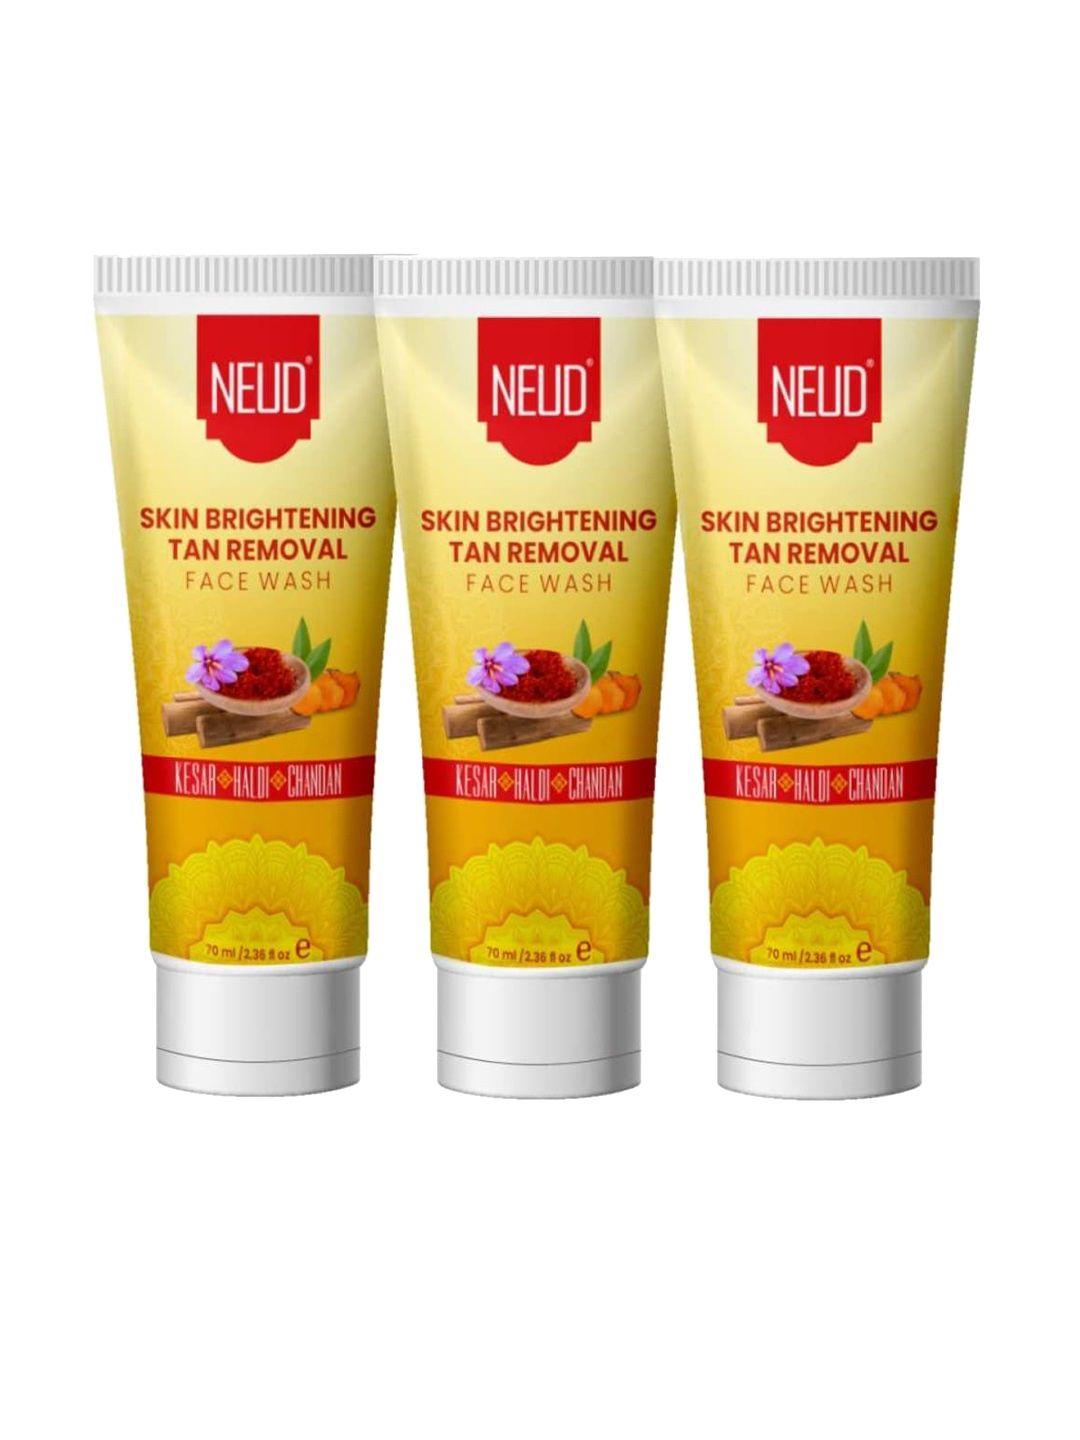 neud skin brightening tan removal set of 3 face wash 70 ml each